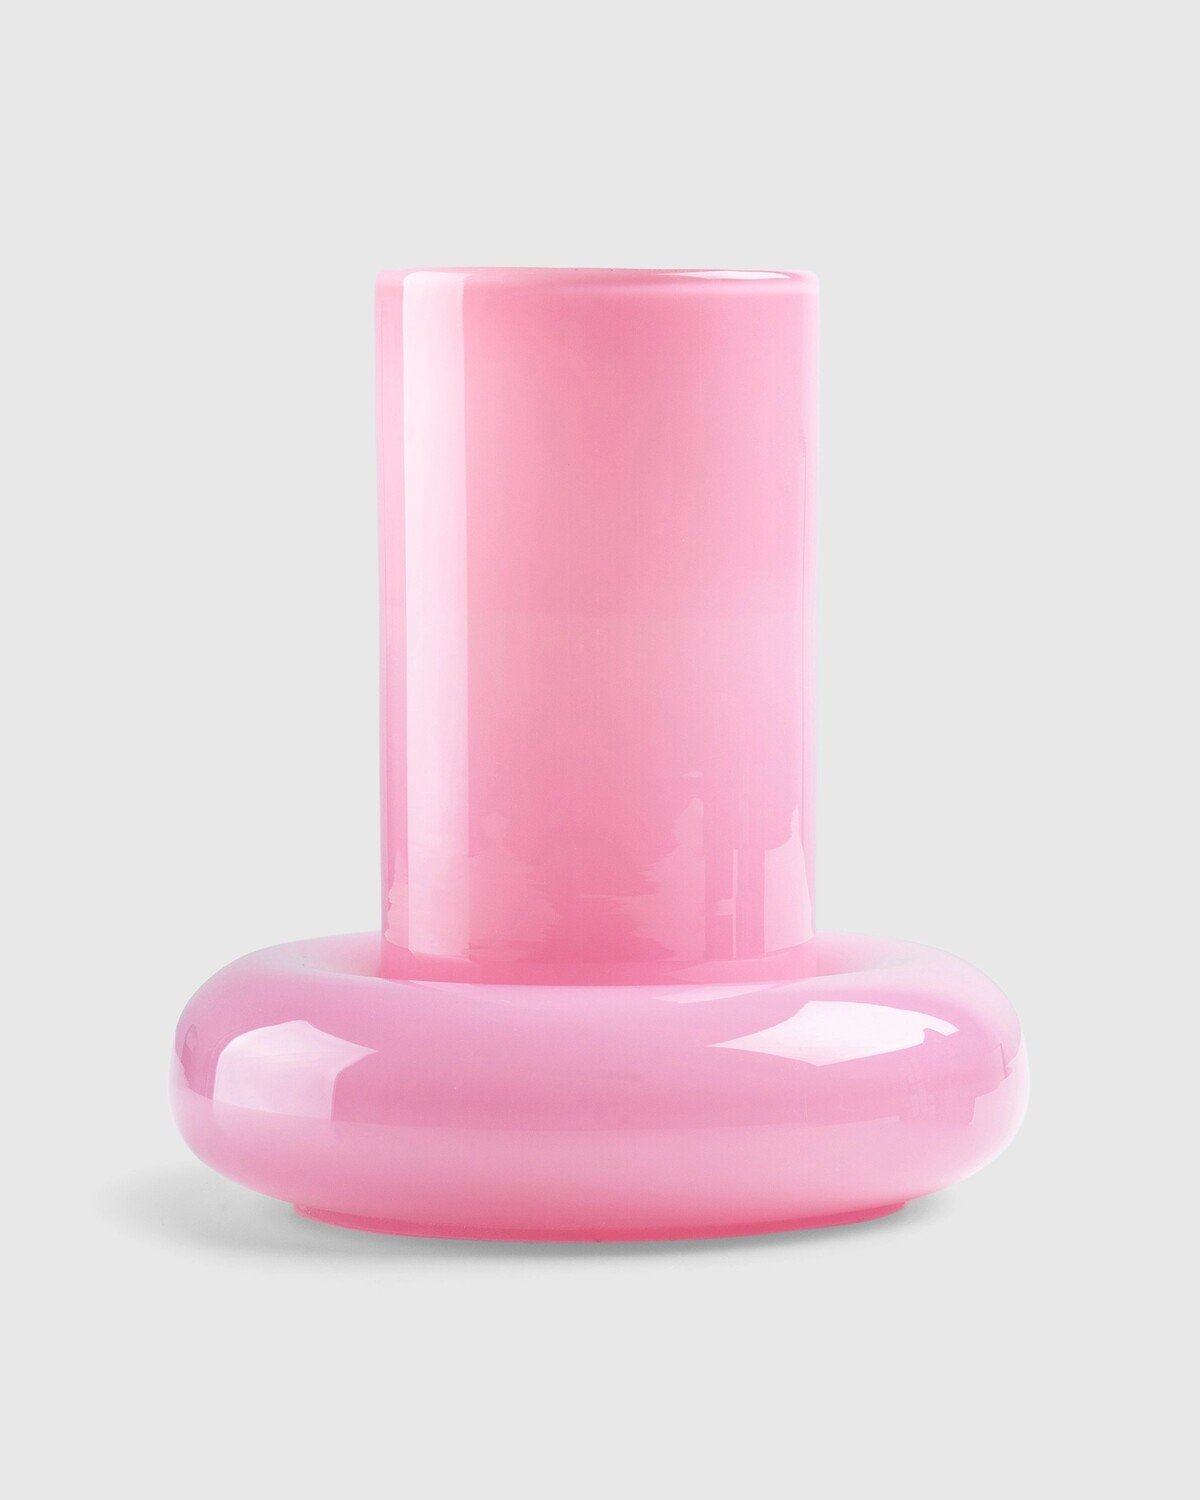 Gustaf WestmanChunky Glass Vase Pink.